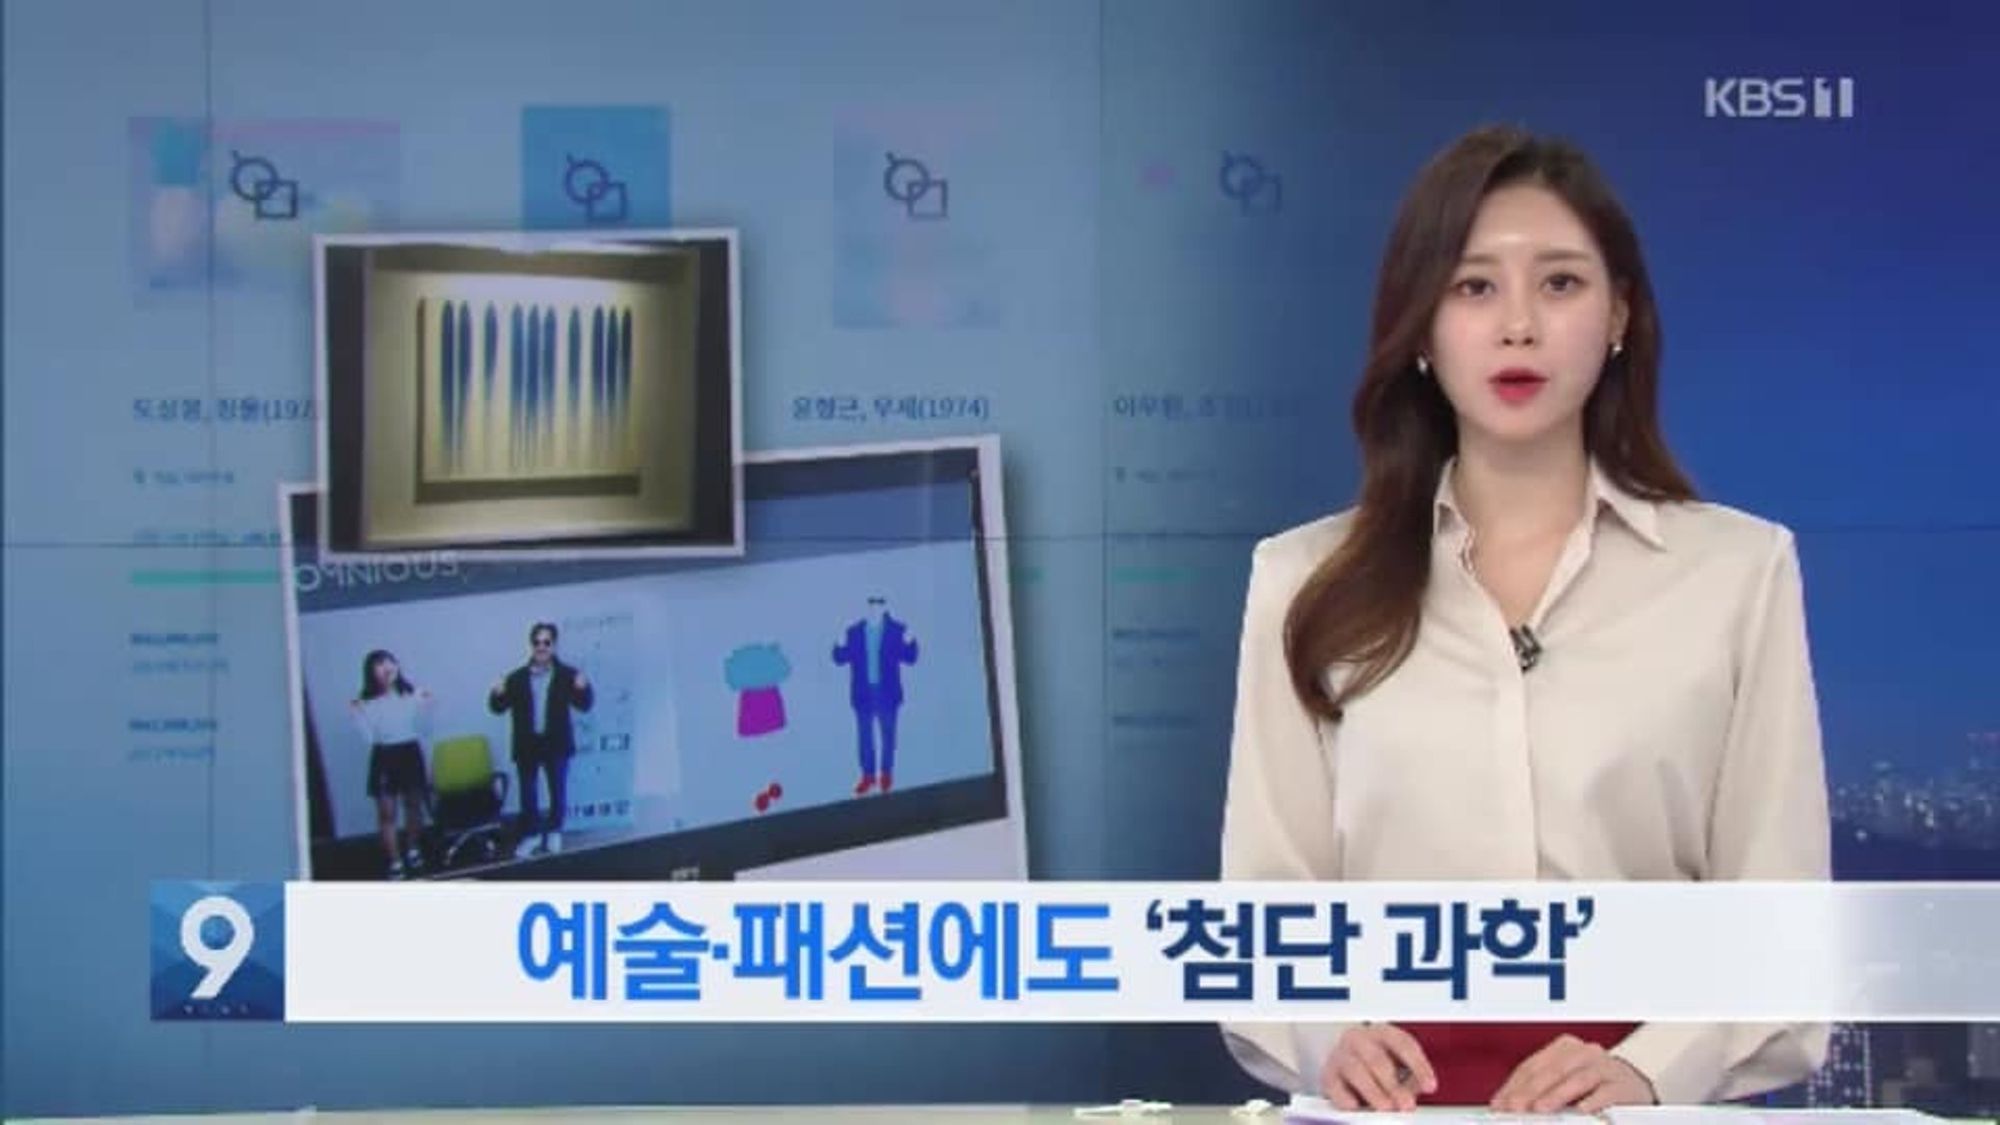 KBS 9시 뉴스에 소개된 옴니어스